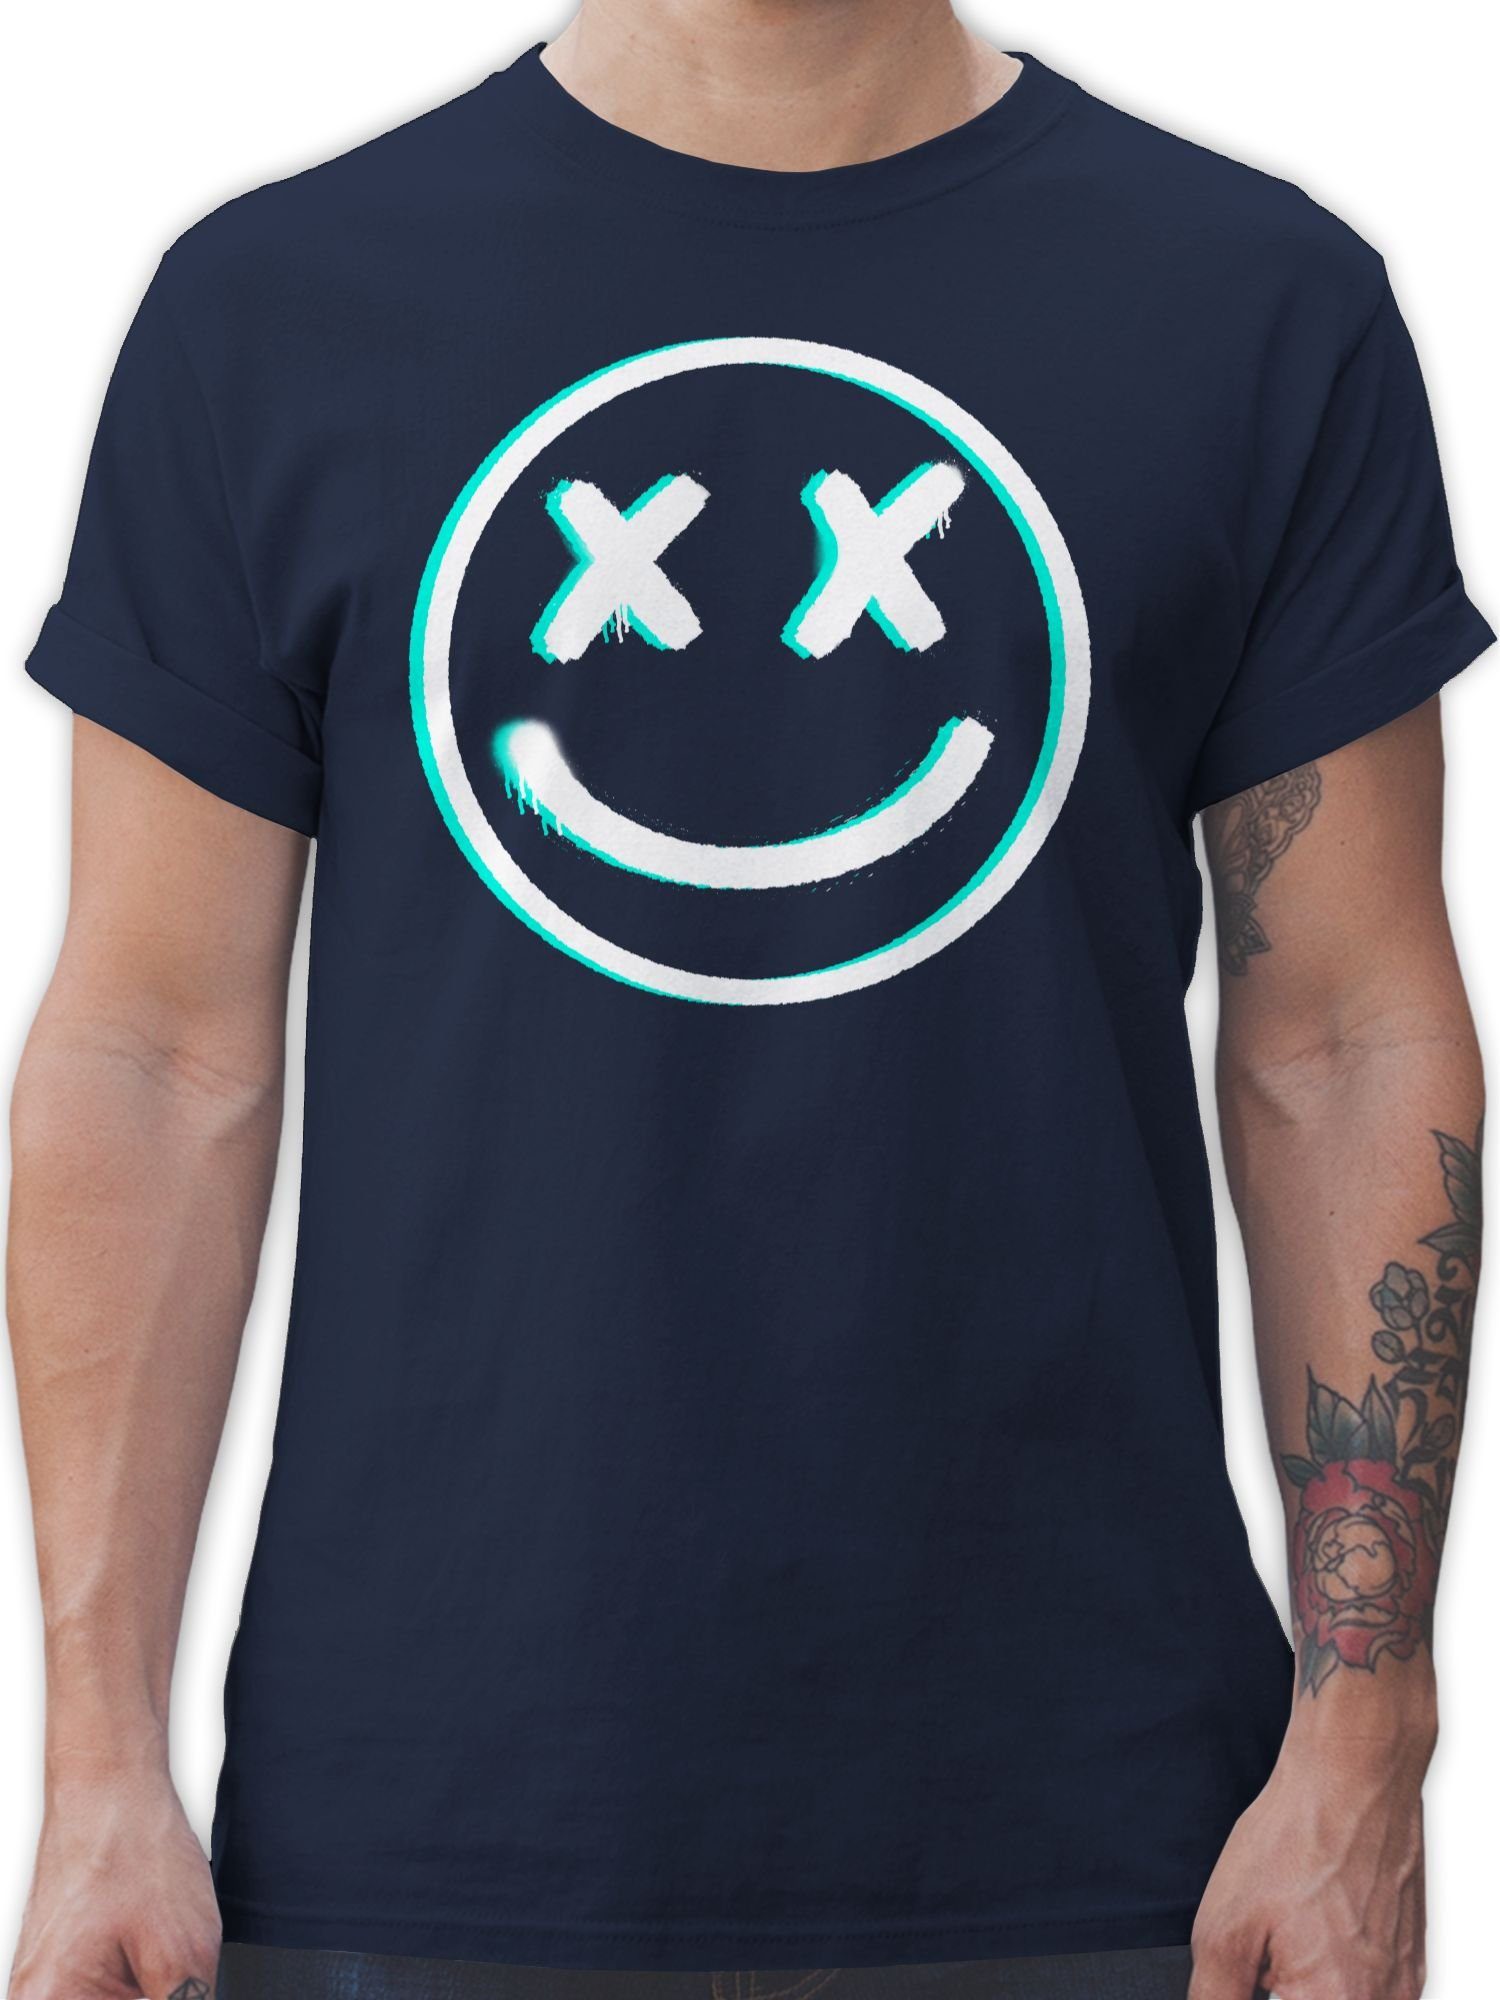 Shirtracer Nerd T-Shirt 02 Face Navy Blau Geschenke Cooles Glitch Smiley